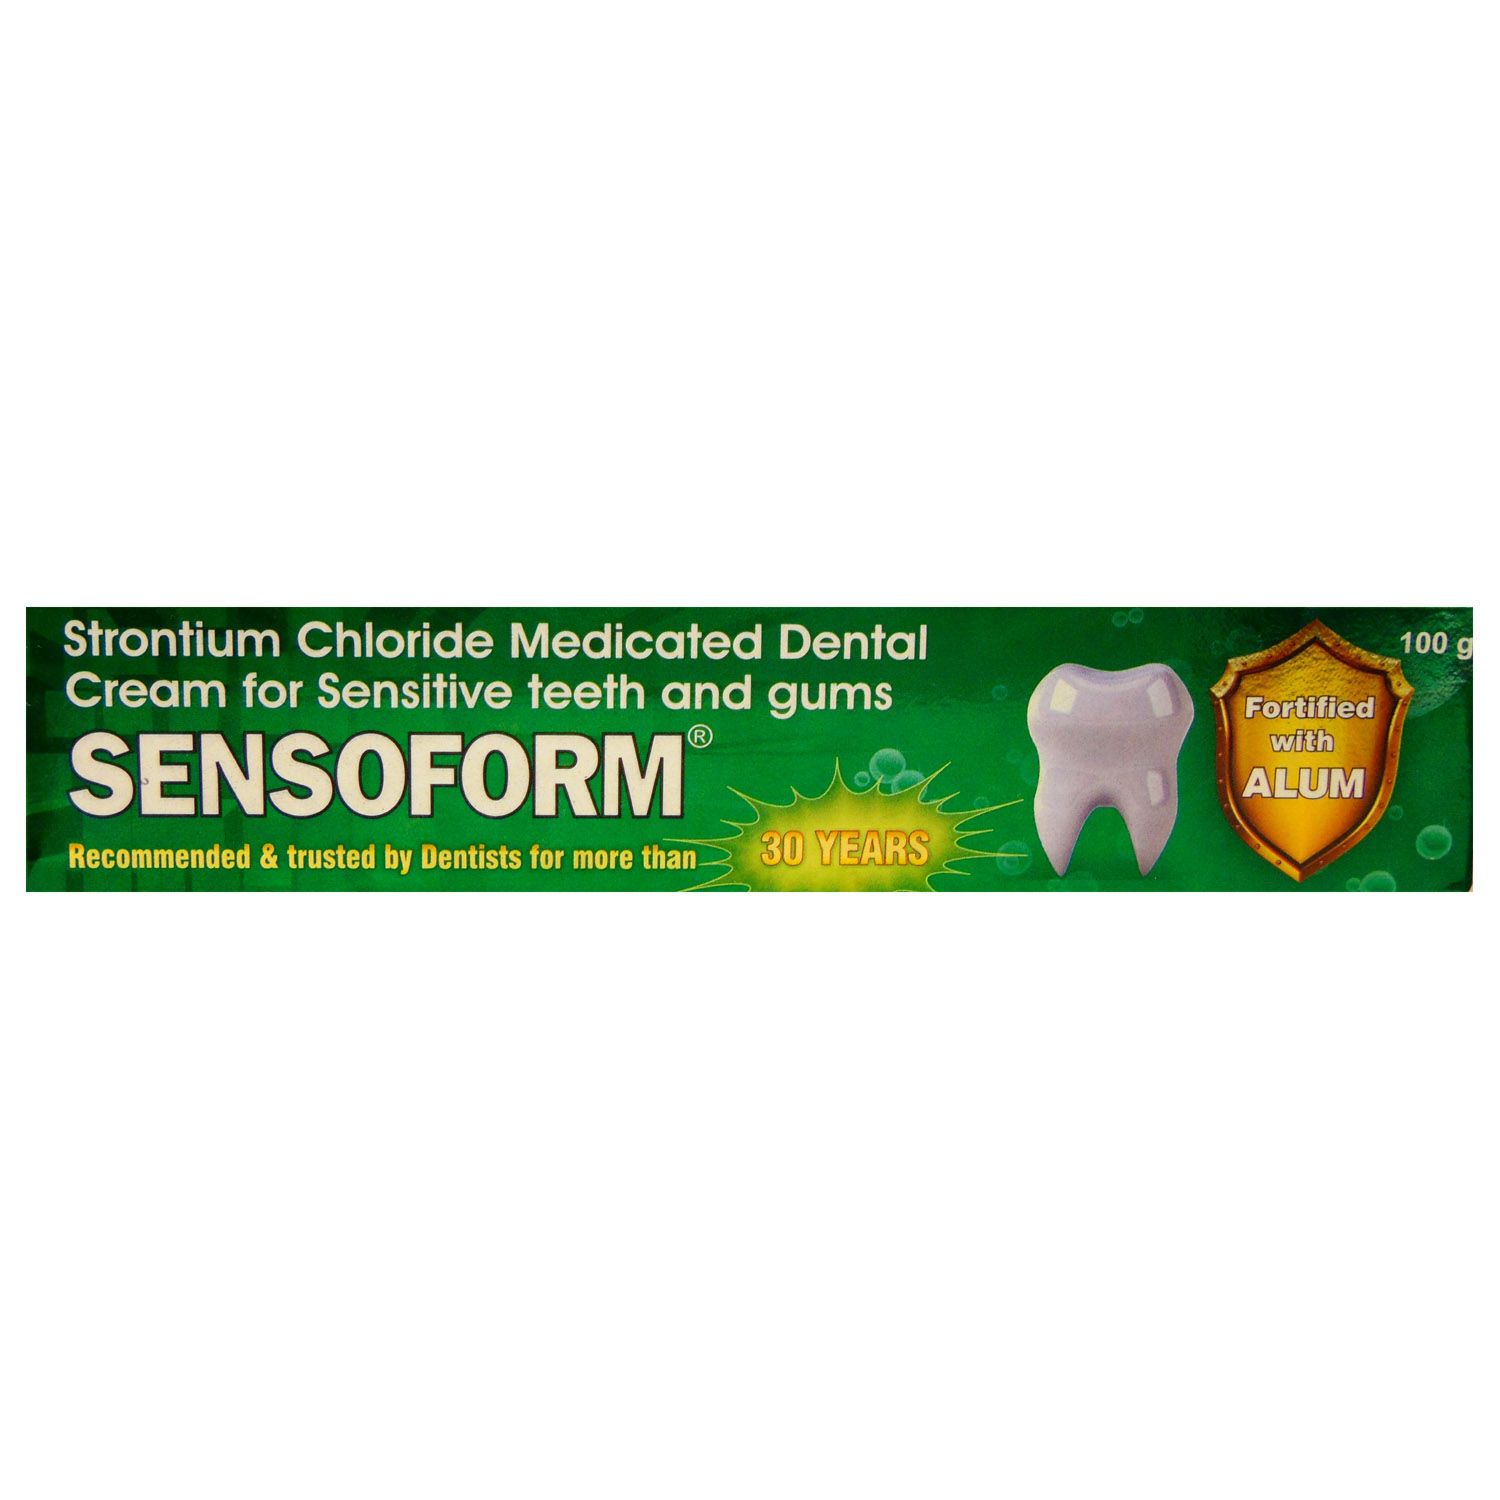 Sensoform Medicated Dental Cream, 100 gm, Pack of 1 